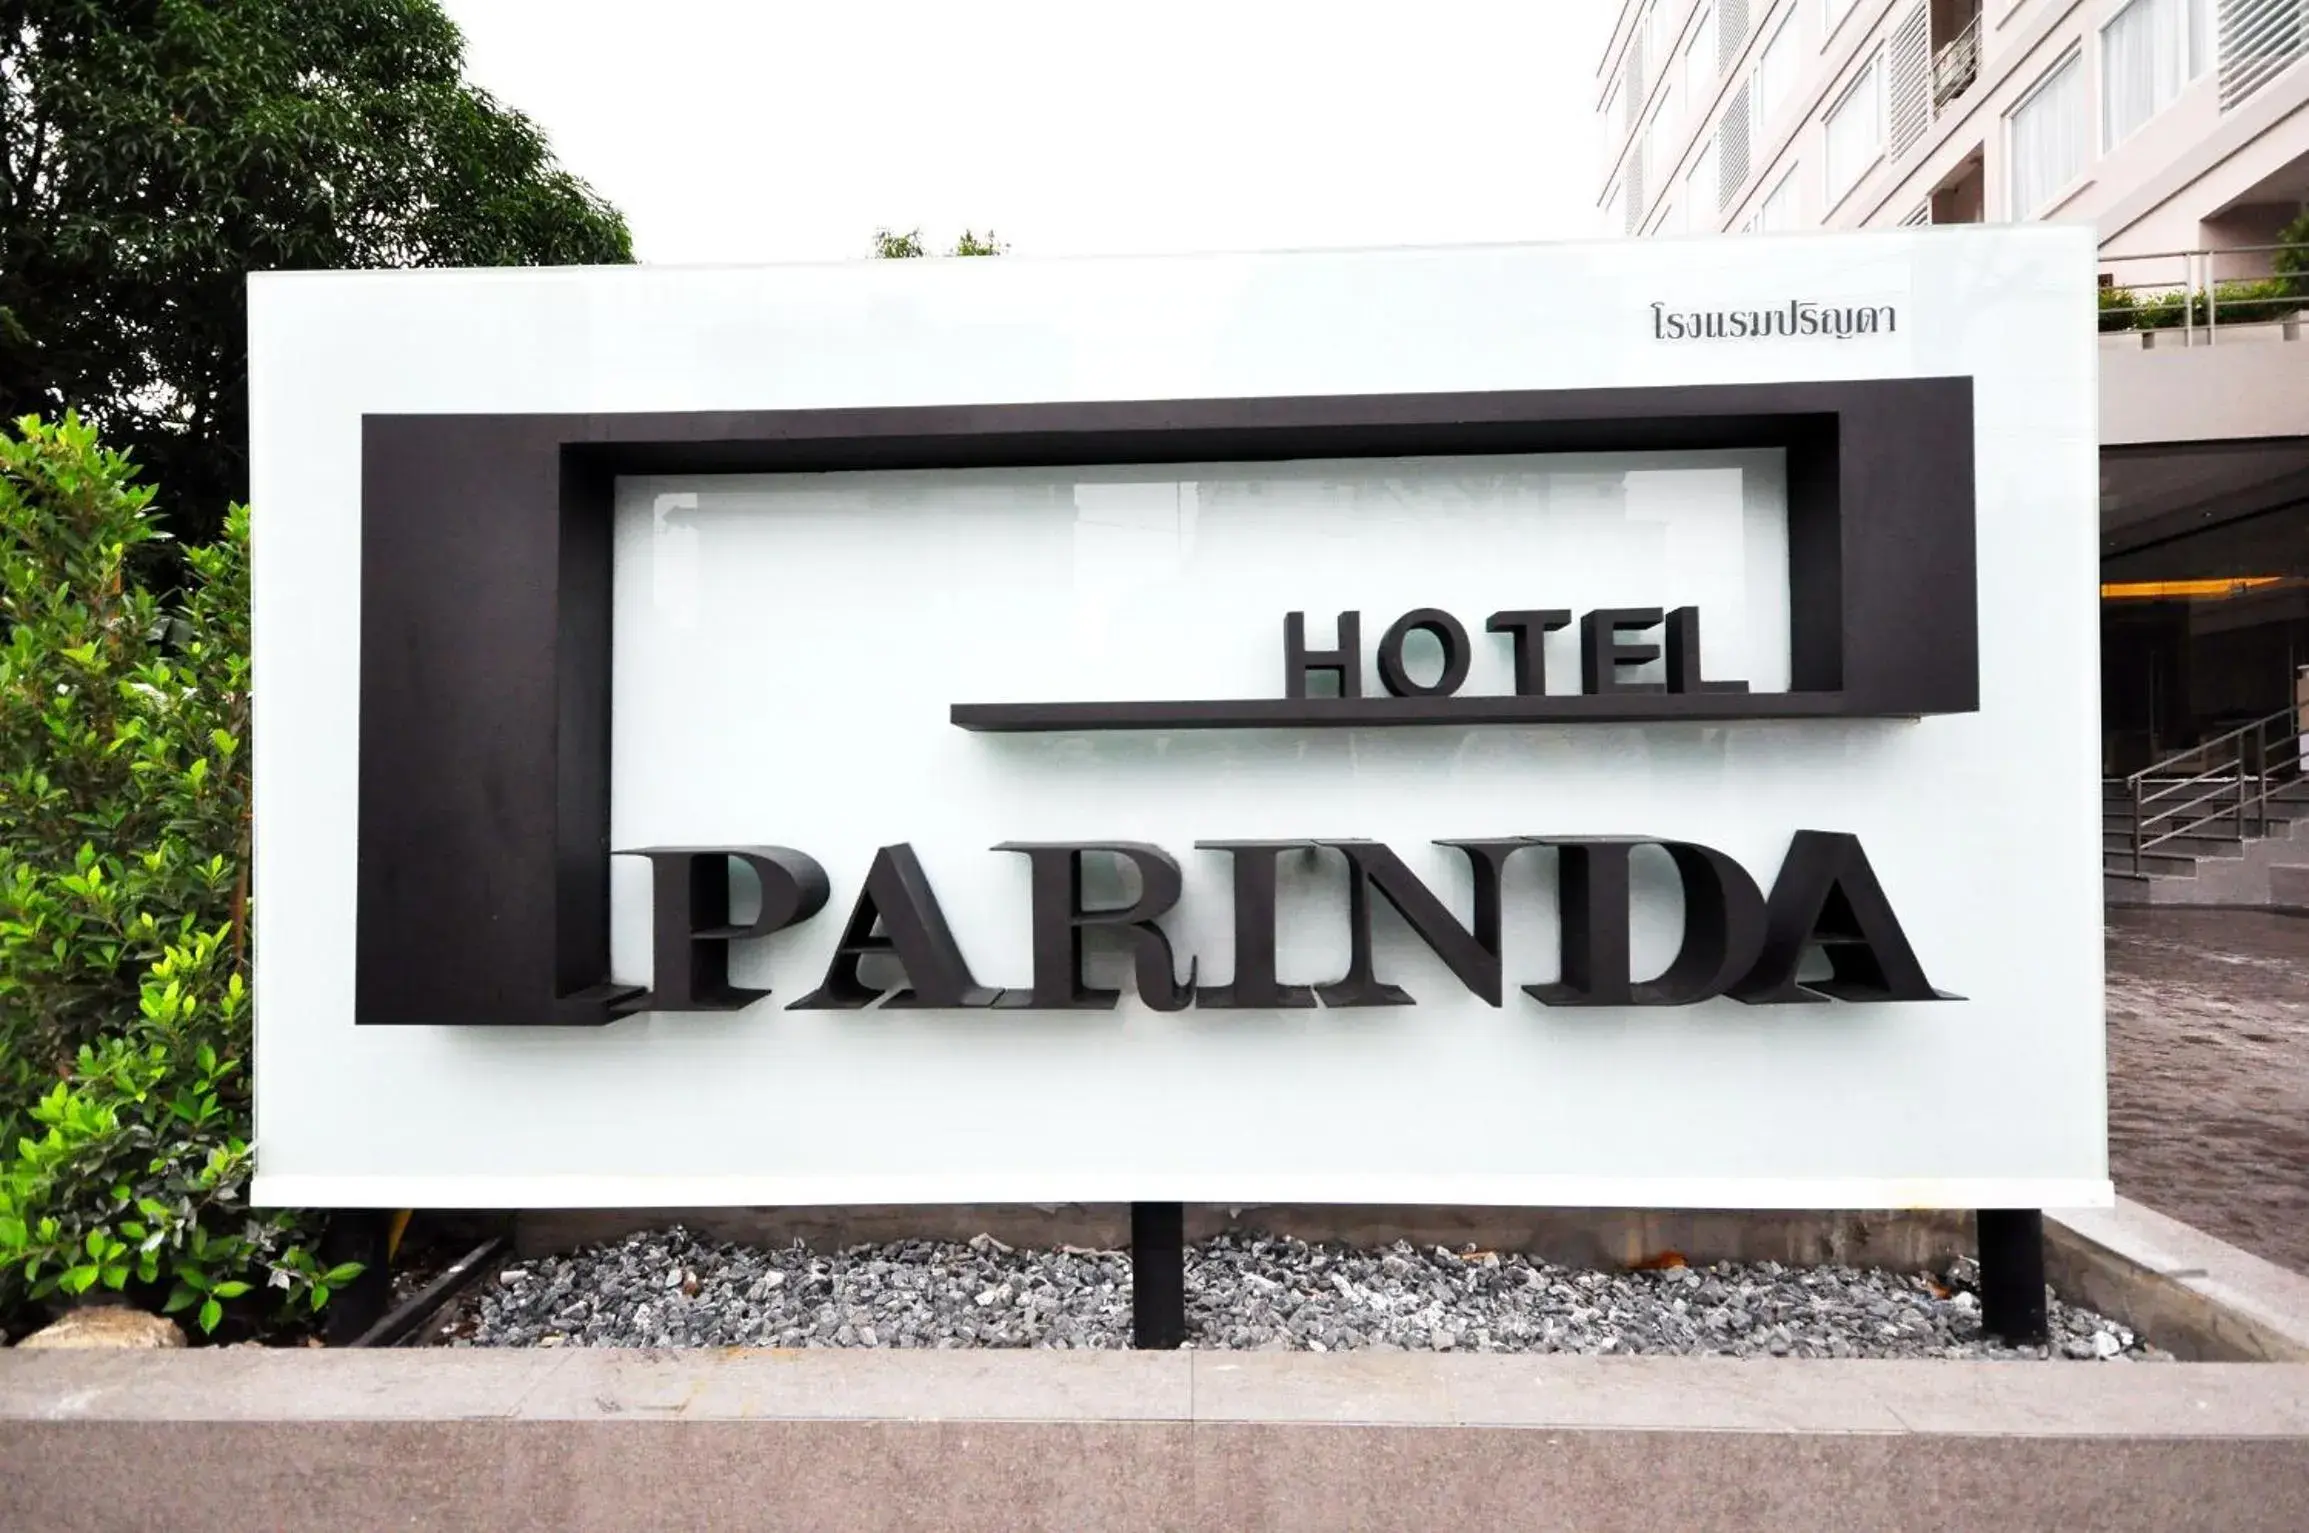 Decorative detail in Parinda Hotel